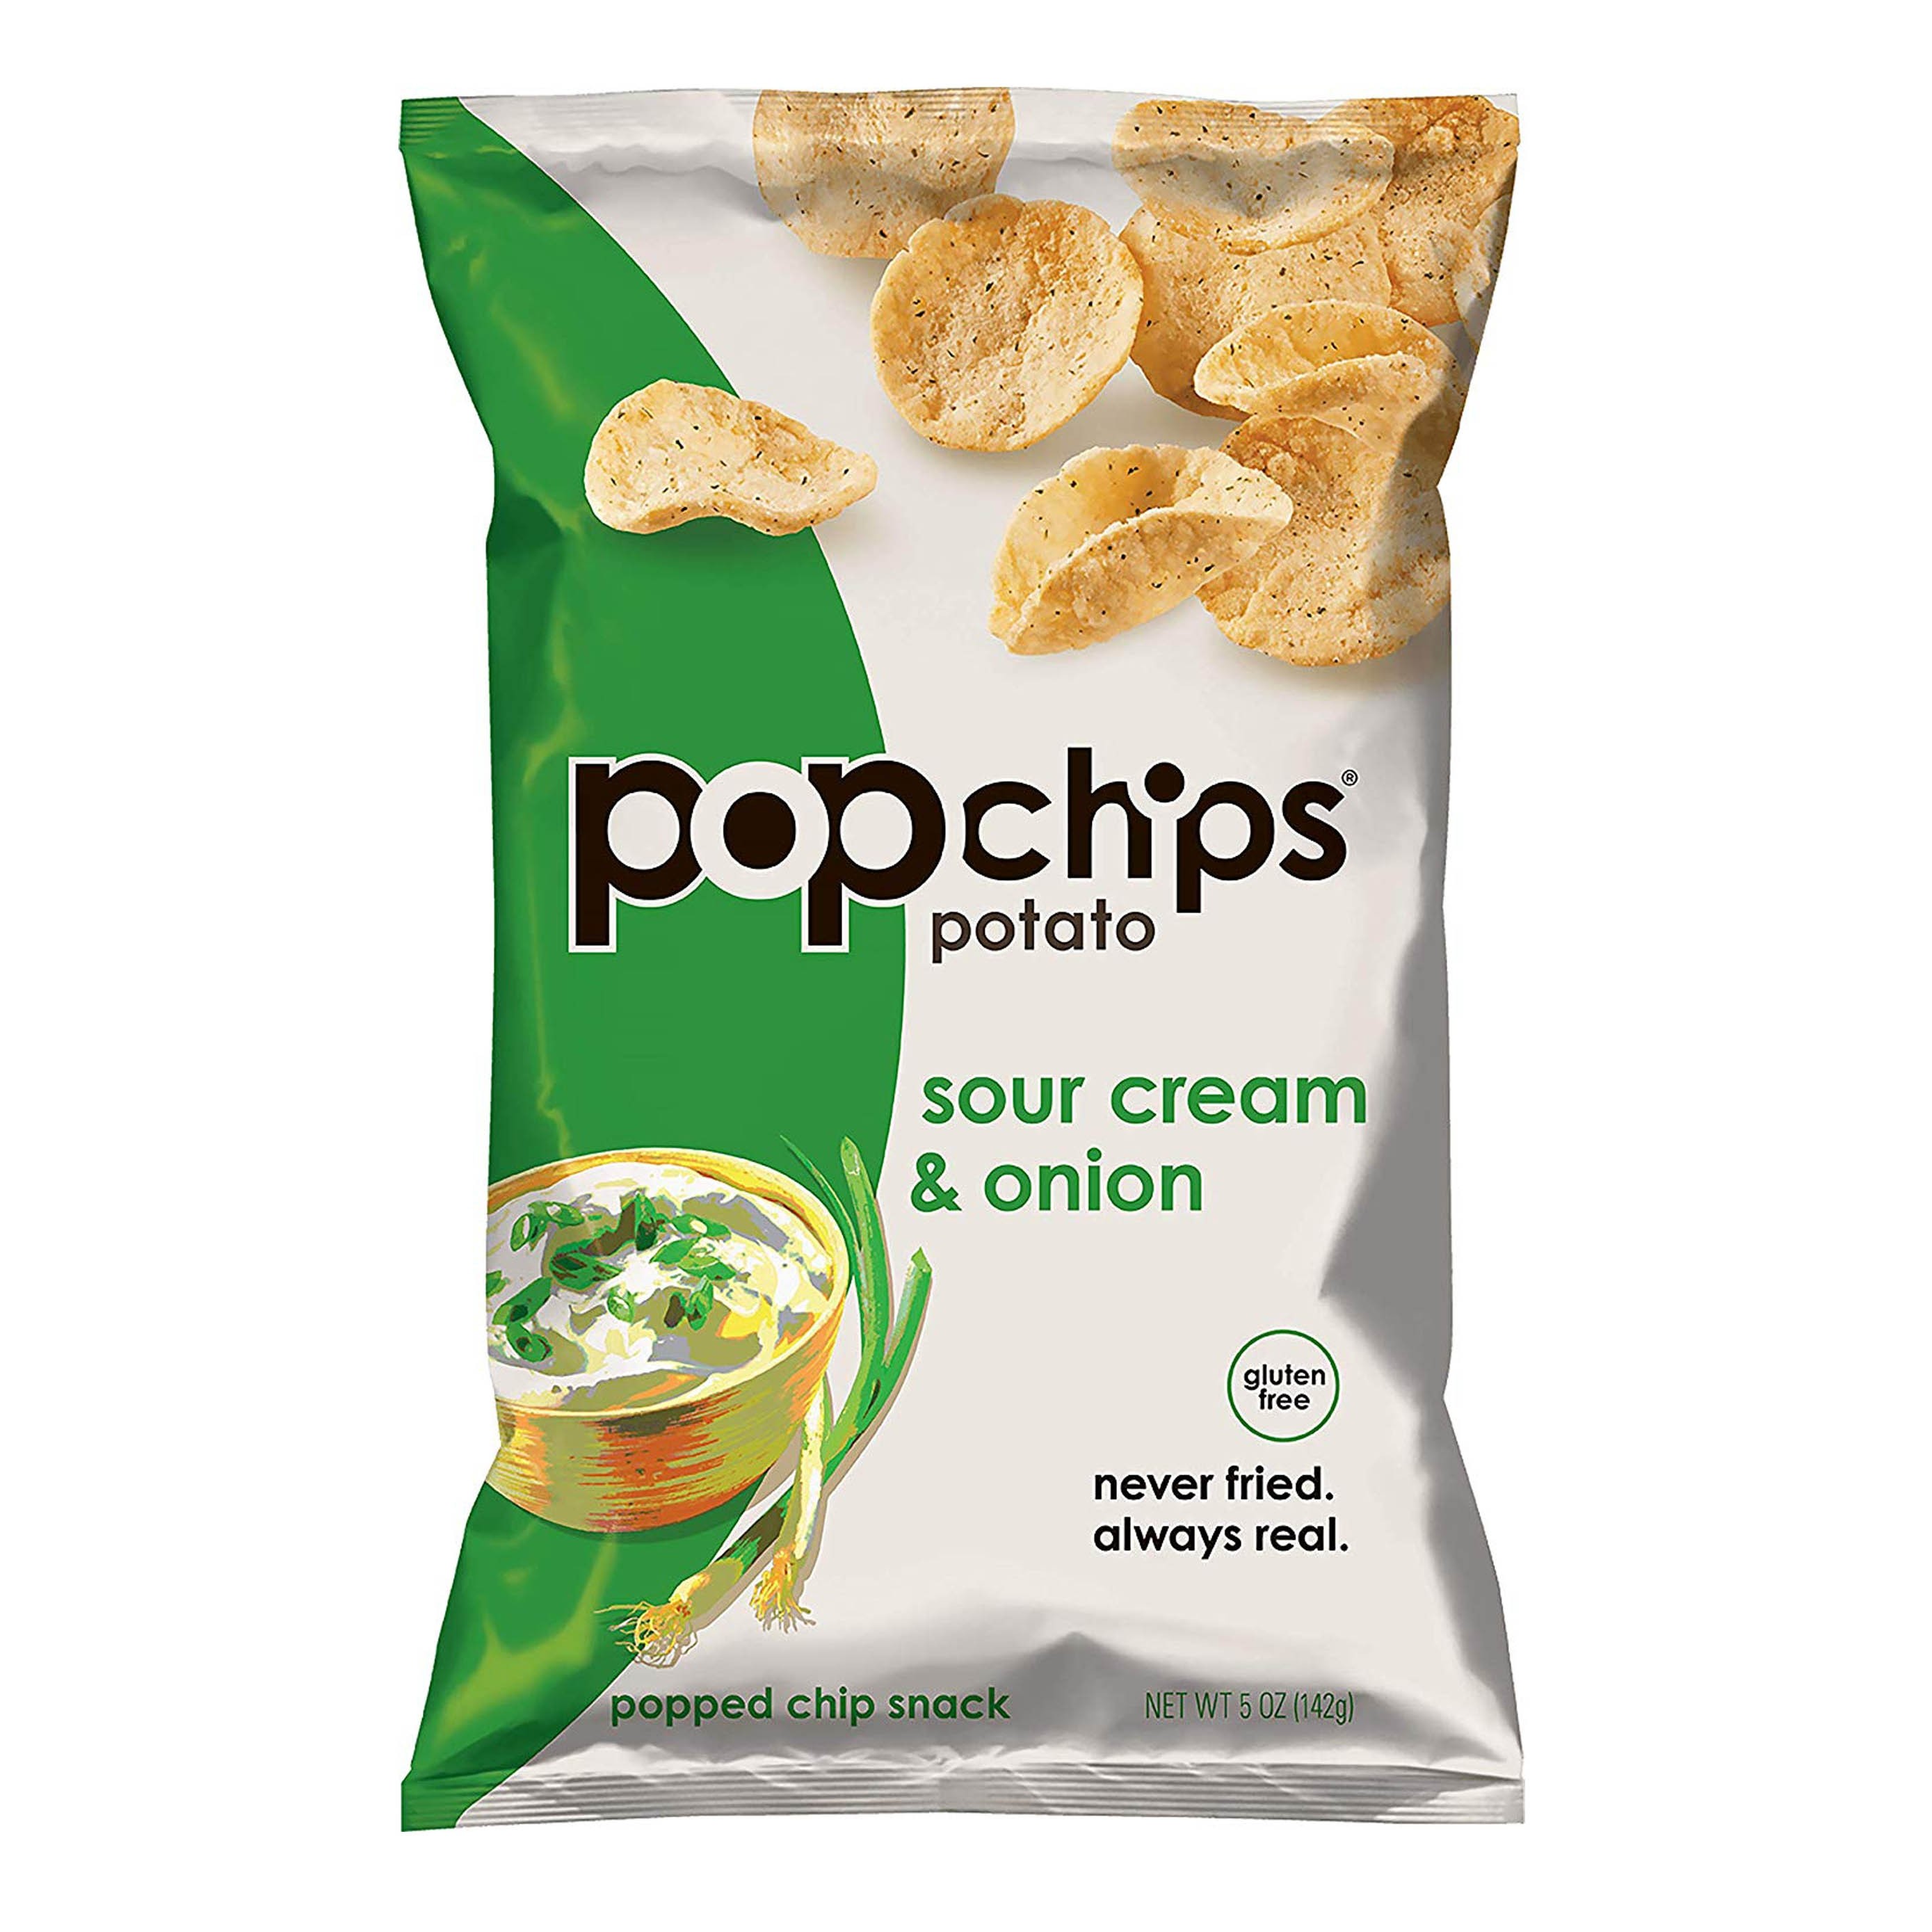 美國無麩質非油炸酸忌廉洋蔥薯片 "POPCHIPS" Gluten Free Sour Cream & Onions Potato Chips